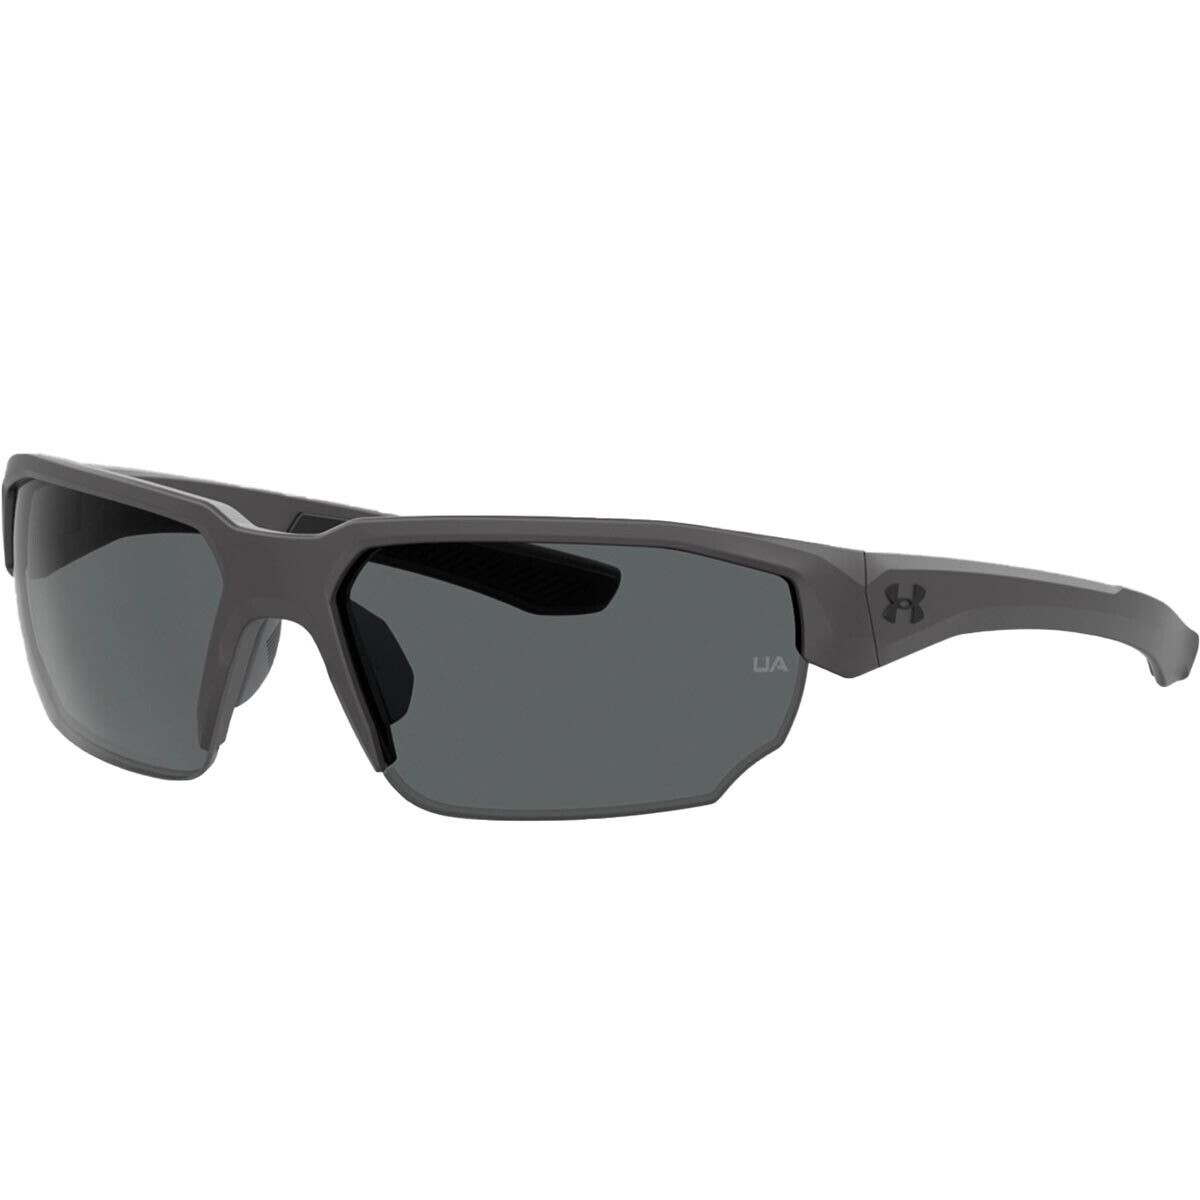 Under Armour Blitzing Sunglasses Polarized Black | Gray